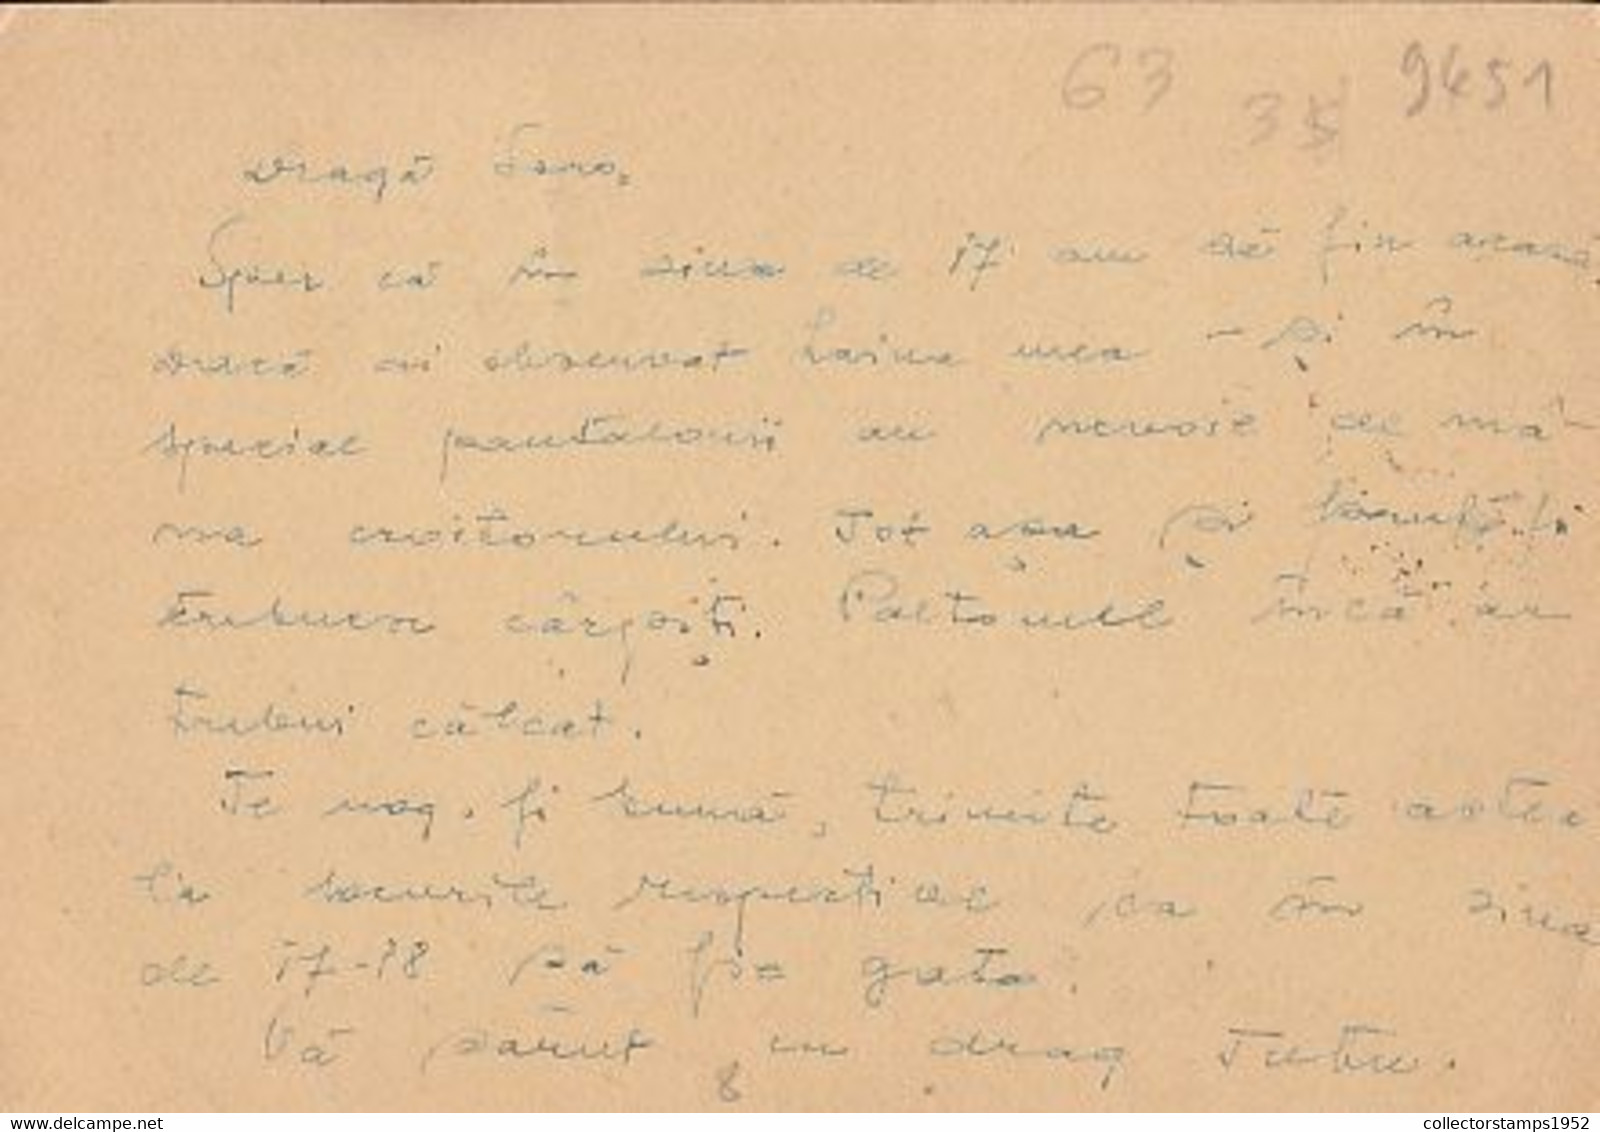 93080- KING MICHAEL POSTCARD STATIONERY, WW2, CENSORED BOTOSANI NR 6, STAMP, 1944, ROMANIA - World War 2 Letters